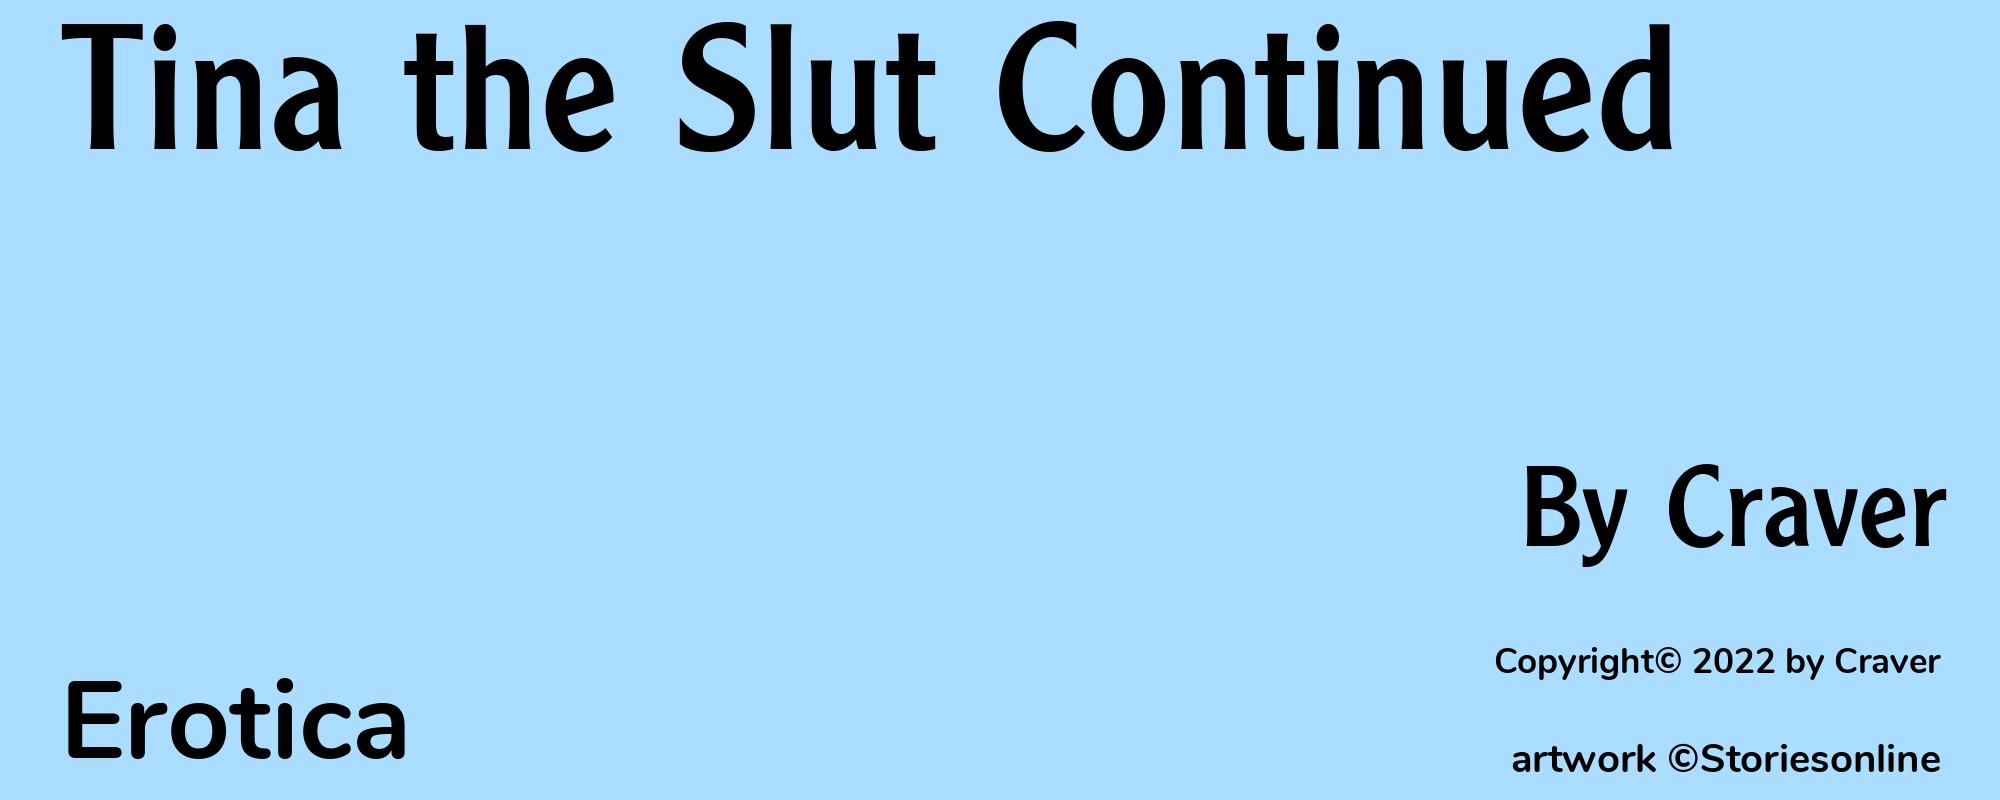 Tina the Slut Continued - Cover